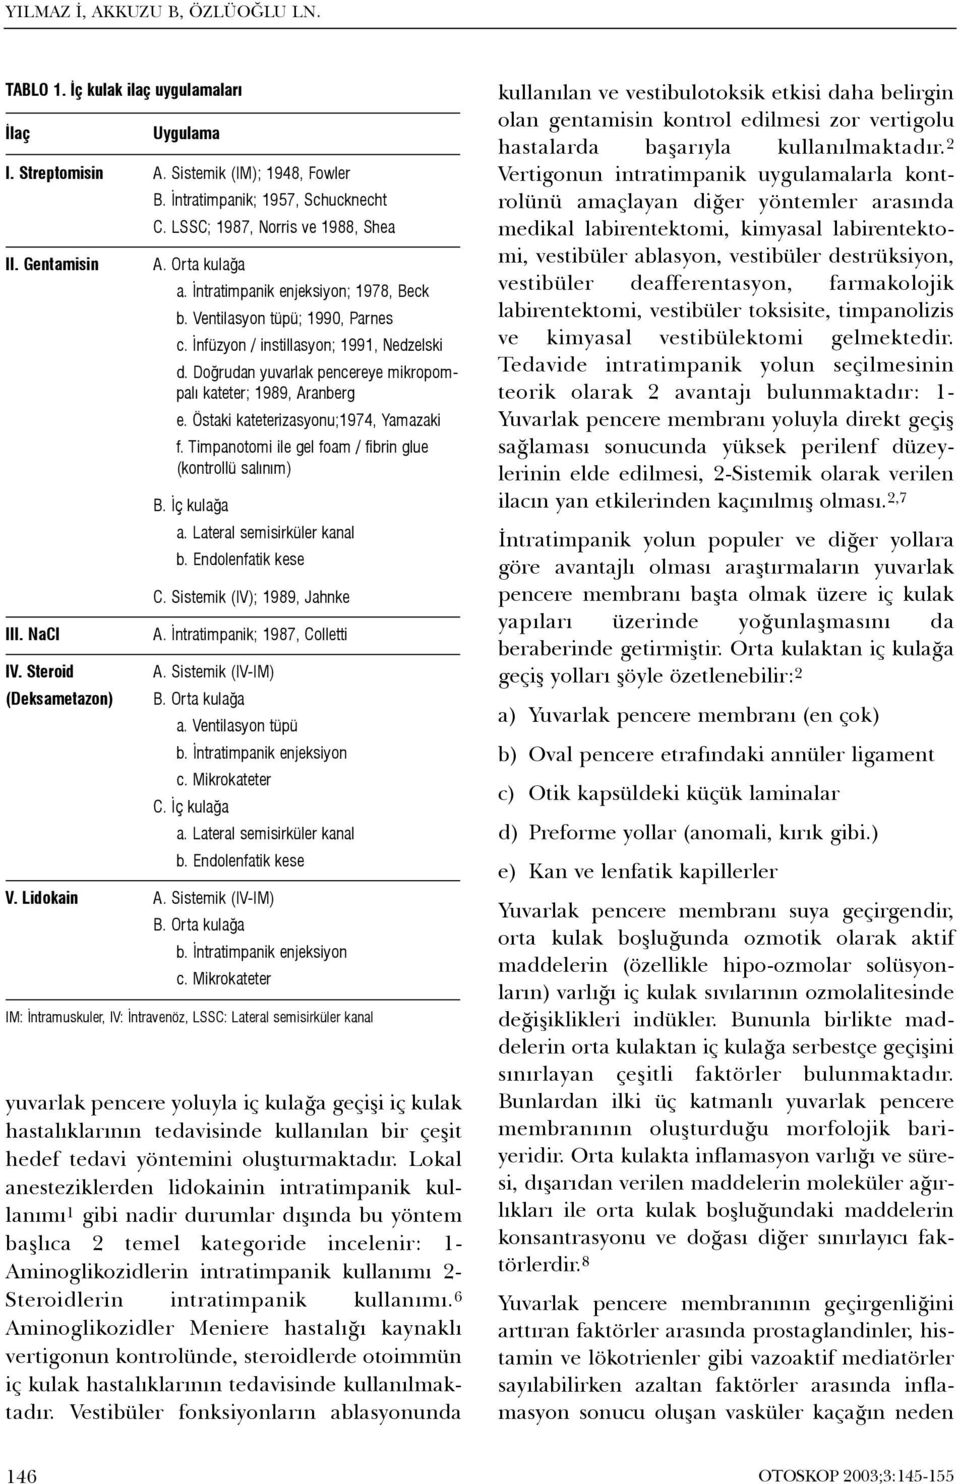 Ýnfüzyon / instillasyon; 1991, Nedzelski d. Doðrudan yuvarlak pencereye mikropompalý kateter; 1989, Aranberg e. Östaki kateterizasyonu;1974, Yamazaki f.